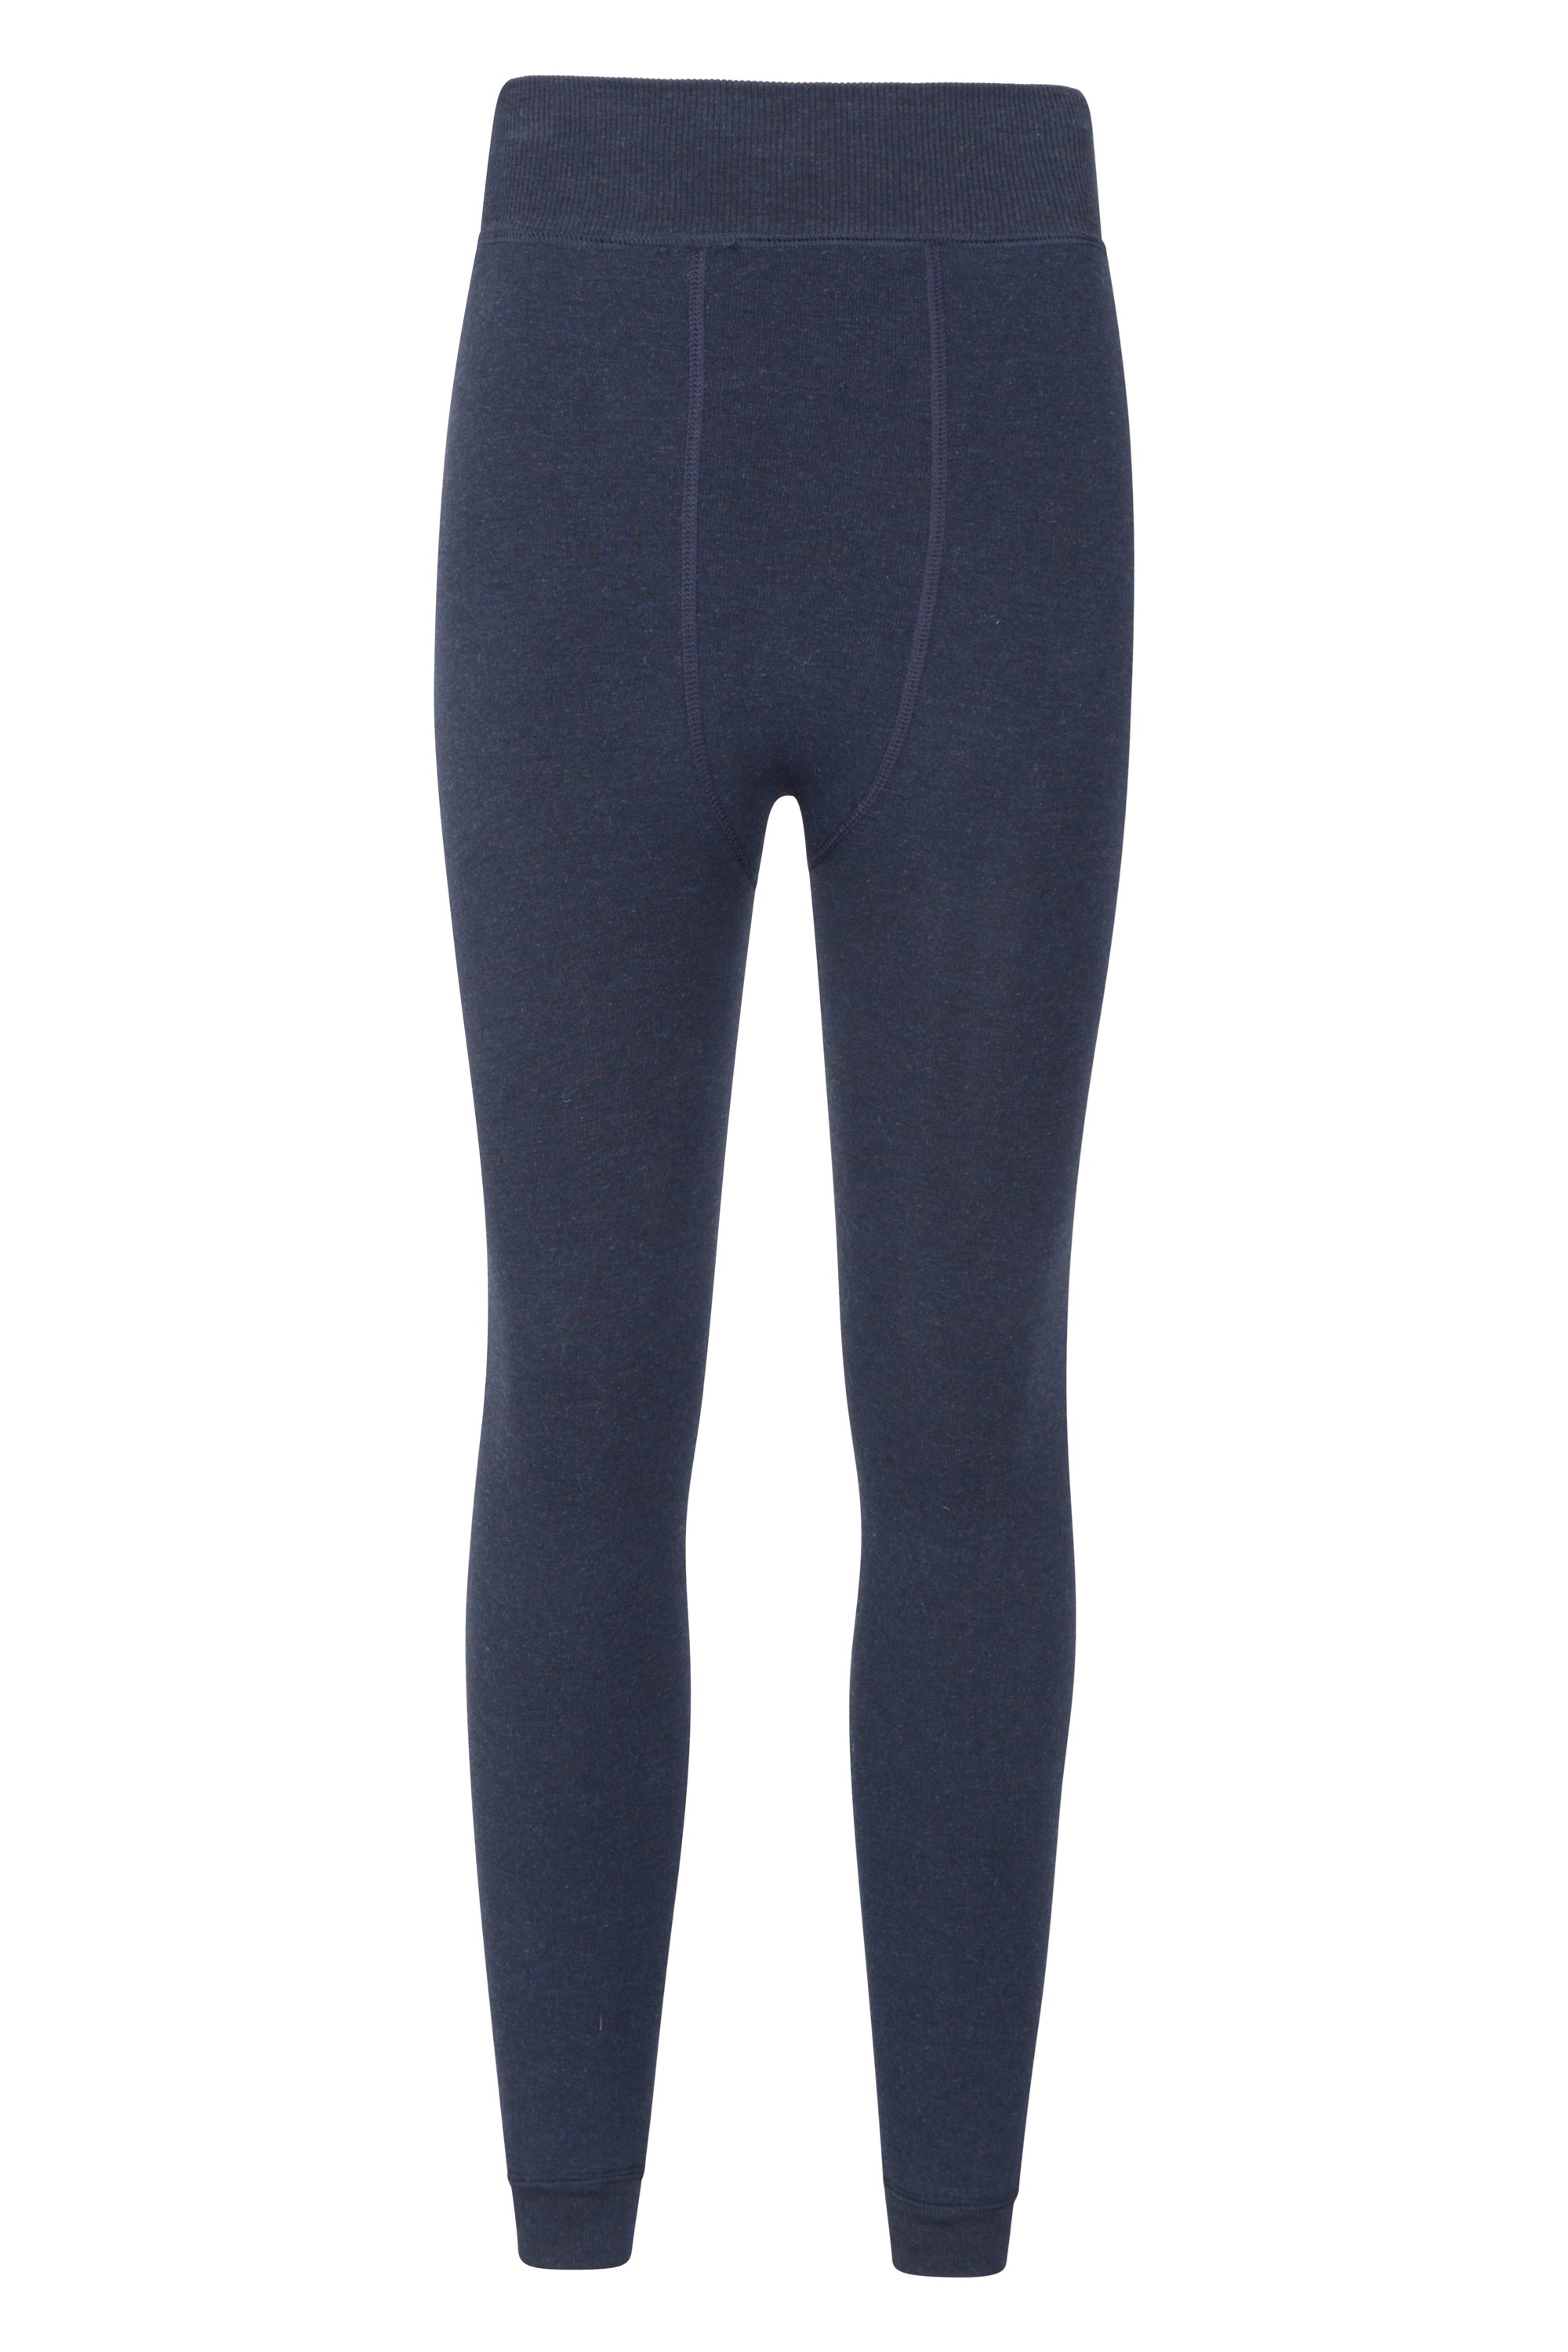 Buy oiry Women's Yoga Pants Fleece Lined Waterproof Leggings High Waist  Warm A91 Winter Hiking Running Leggings Pockets at